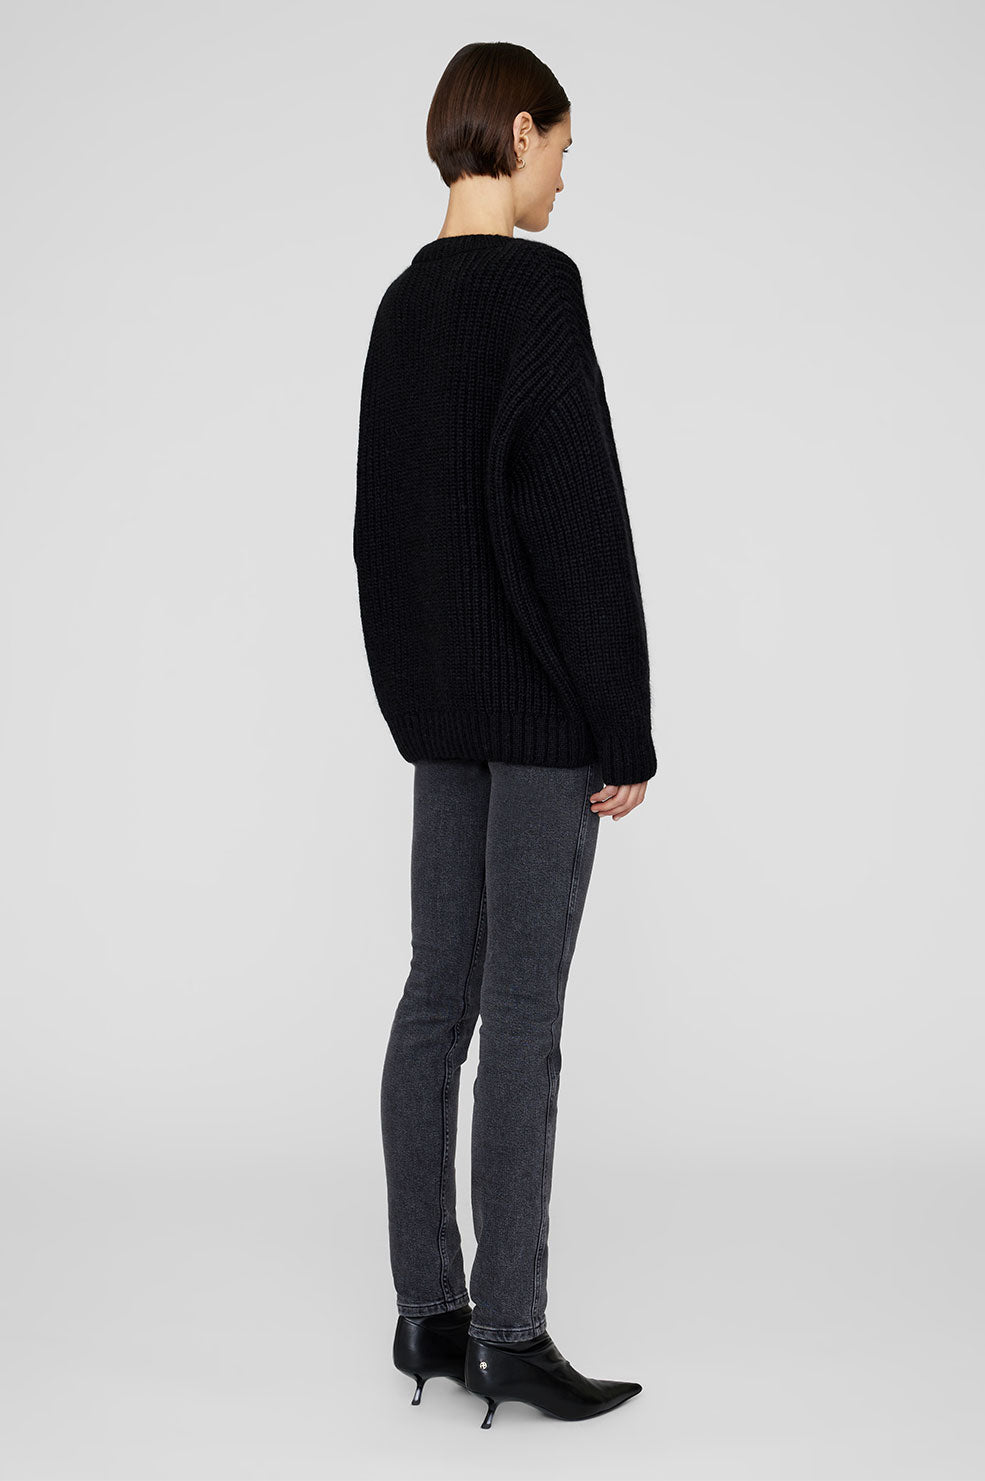 ANINE BING Sydney Crew Sweater - Black - On Model Back